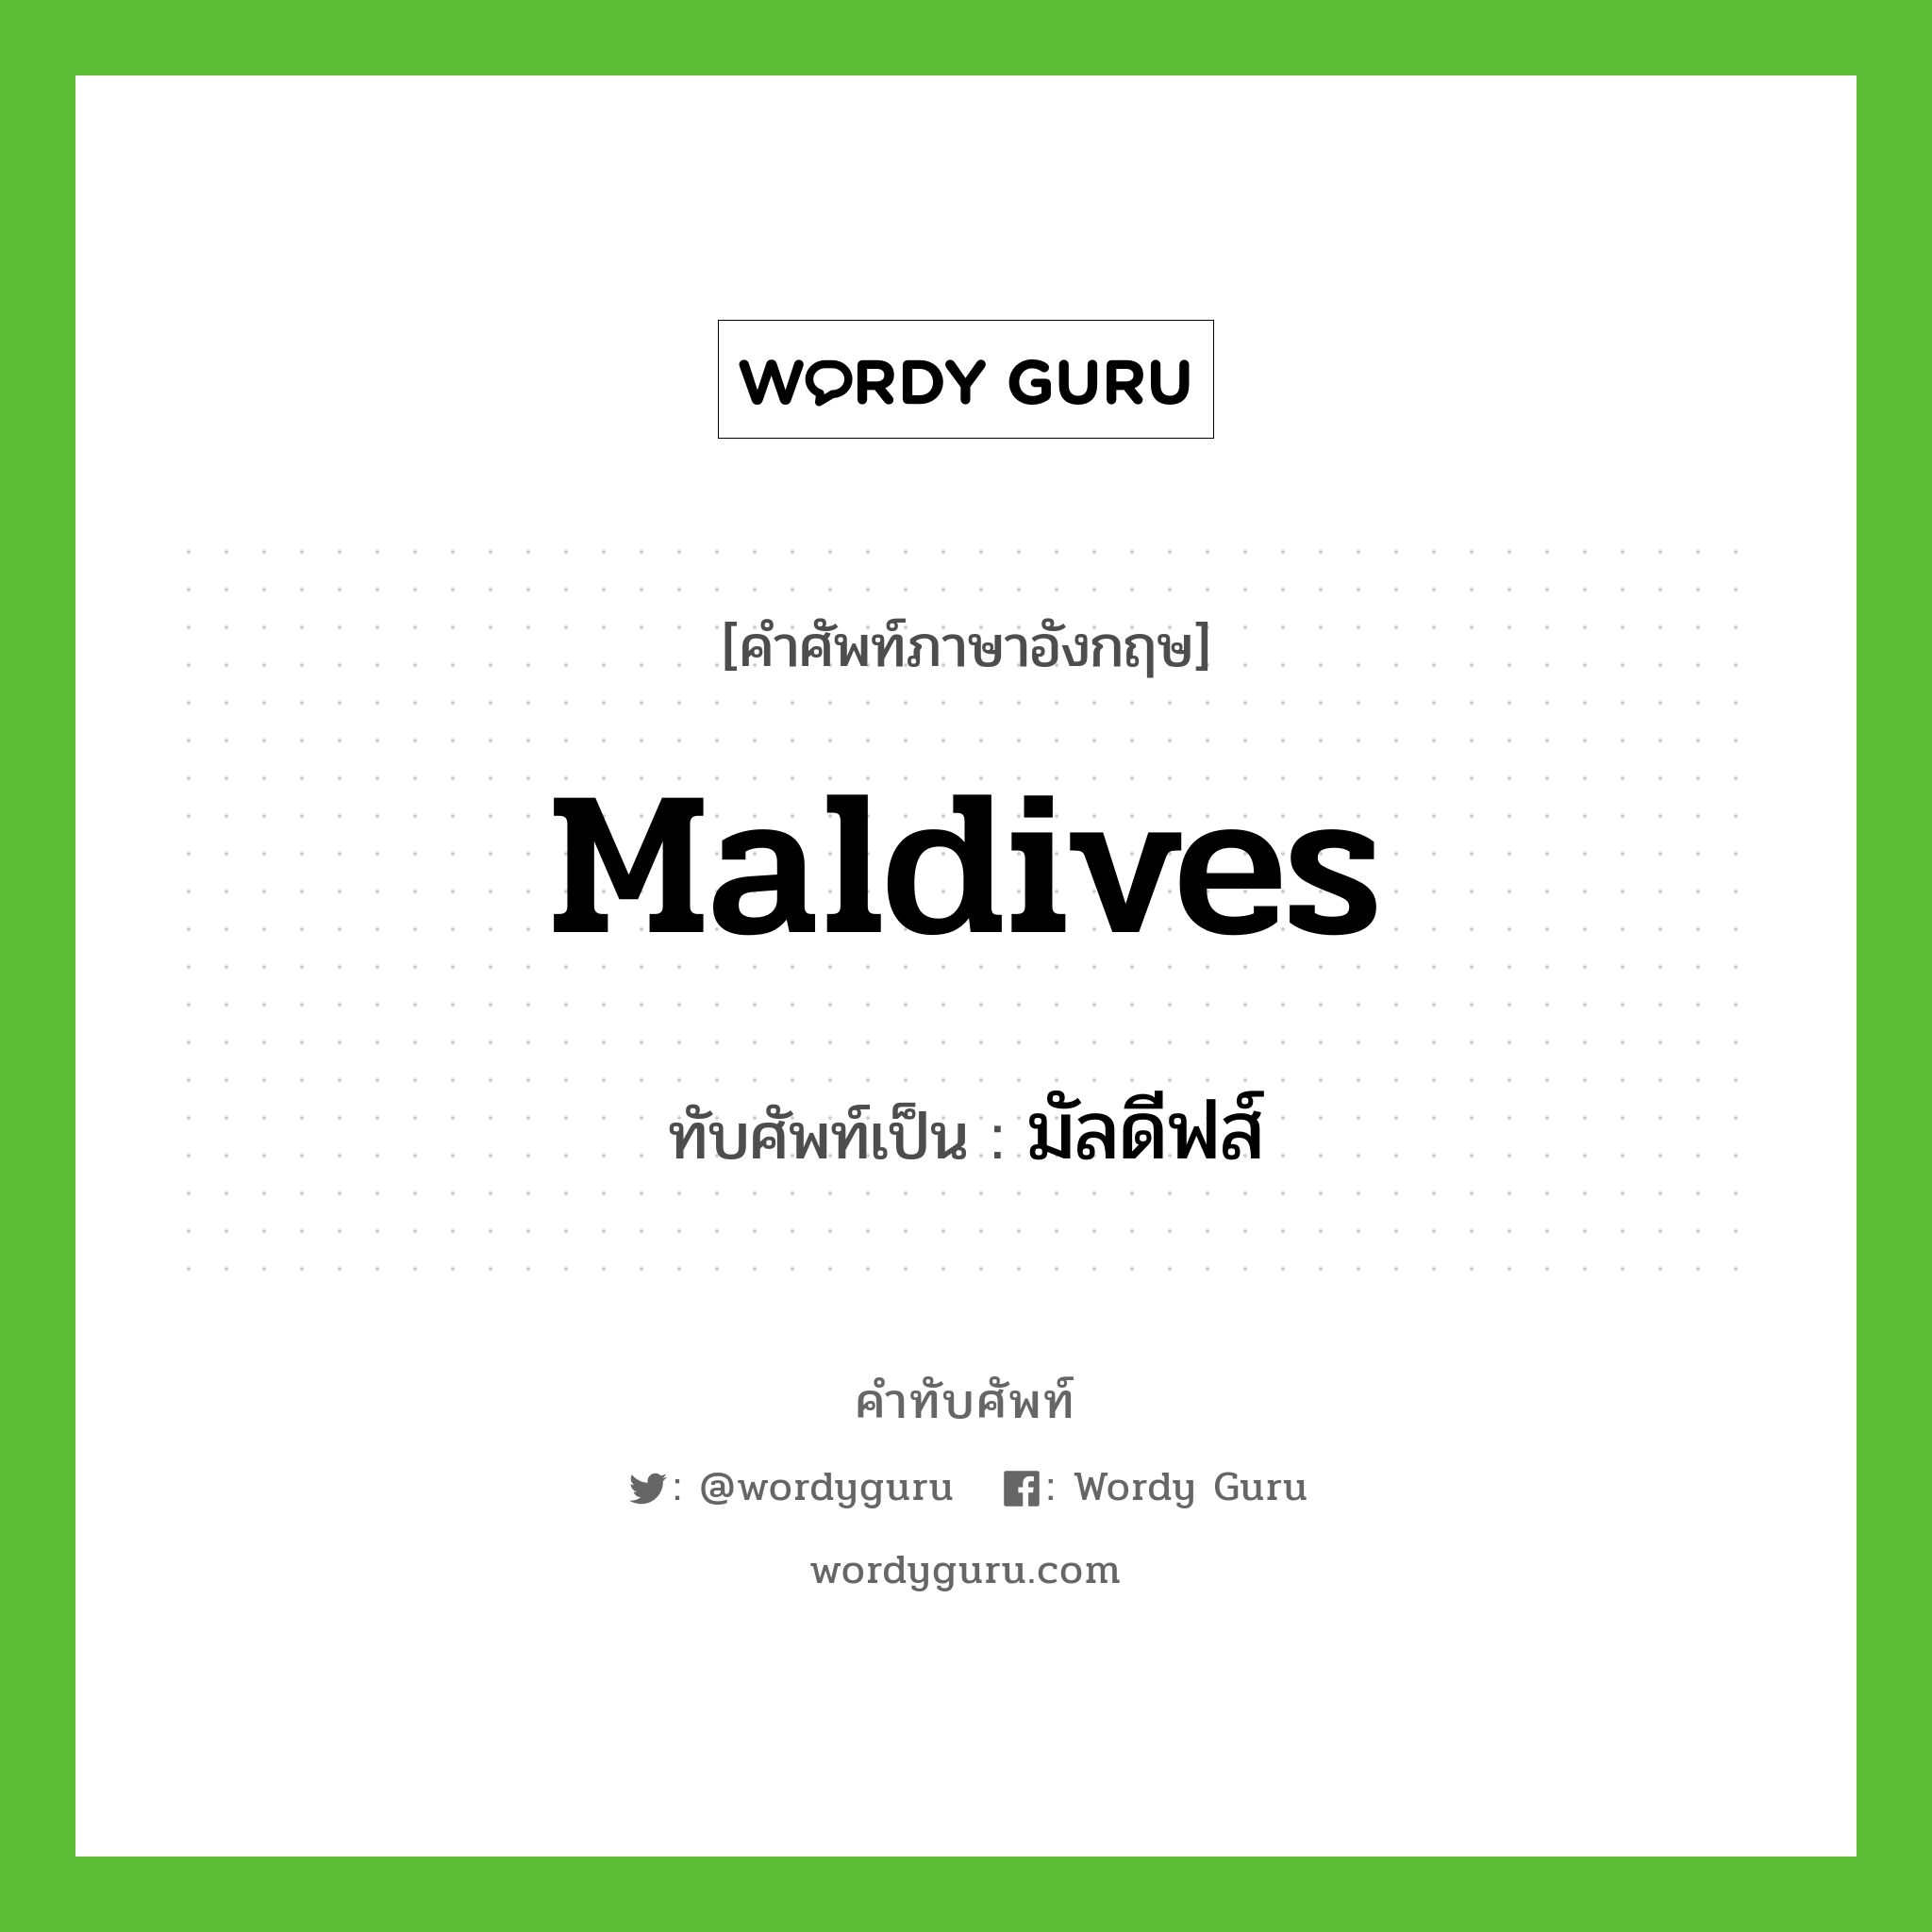 Maldives เขียนเป็นคำไทยว่าอะไร?, คำศัพท์ภาษาอังกฤษ Maldives ทับศัพท์เป็น มัลดีฟส์